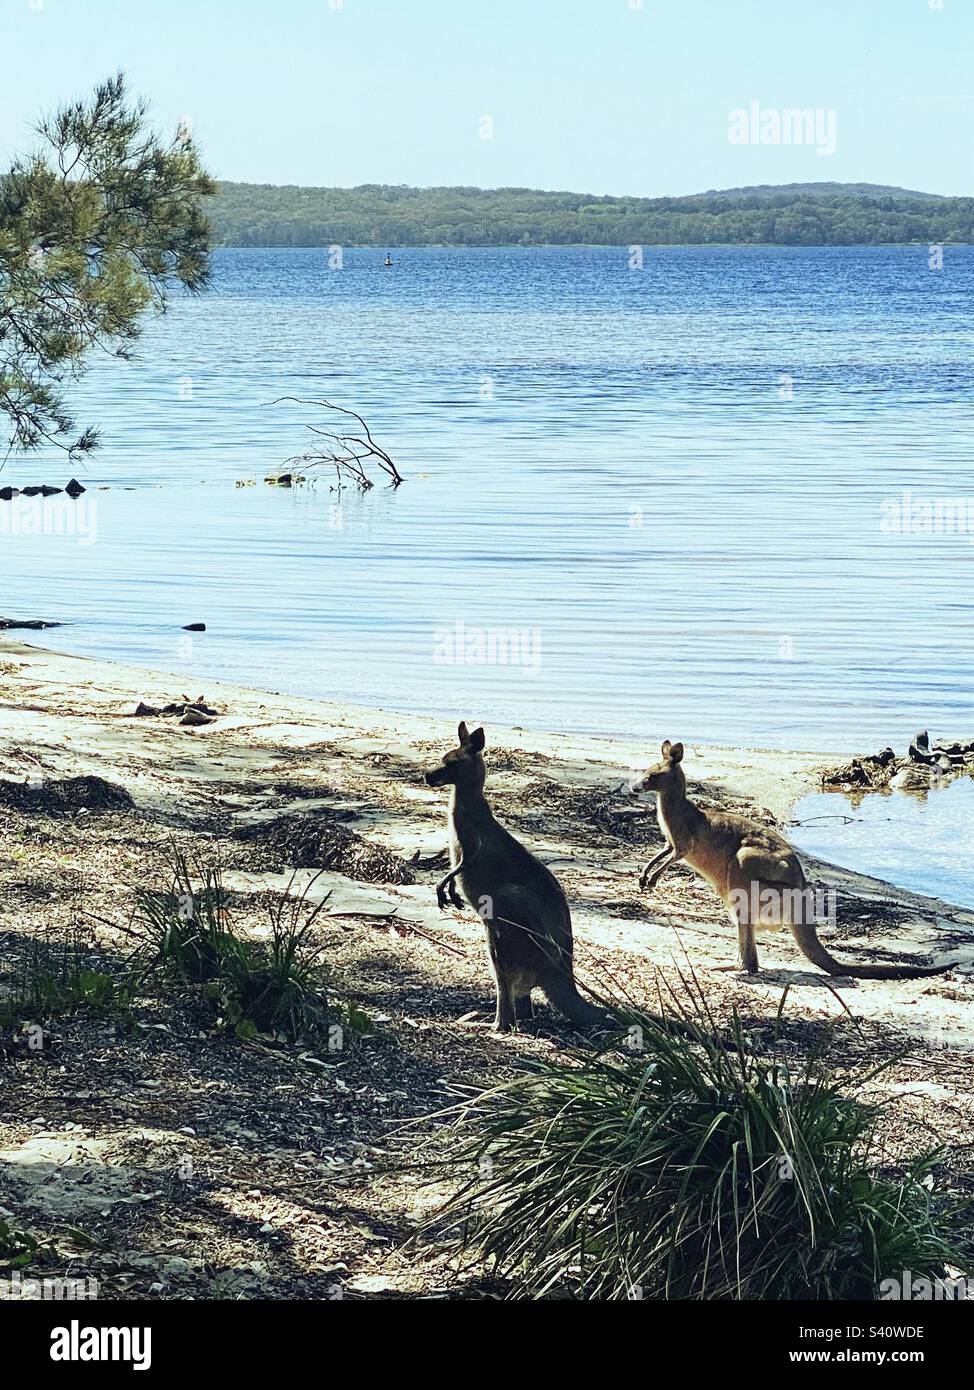 Zwei Kängurus am Wasser, hell am Tag. Legendäre australische Kängurus. Stockfoto